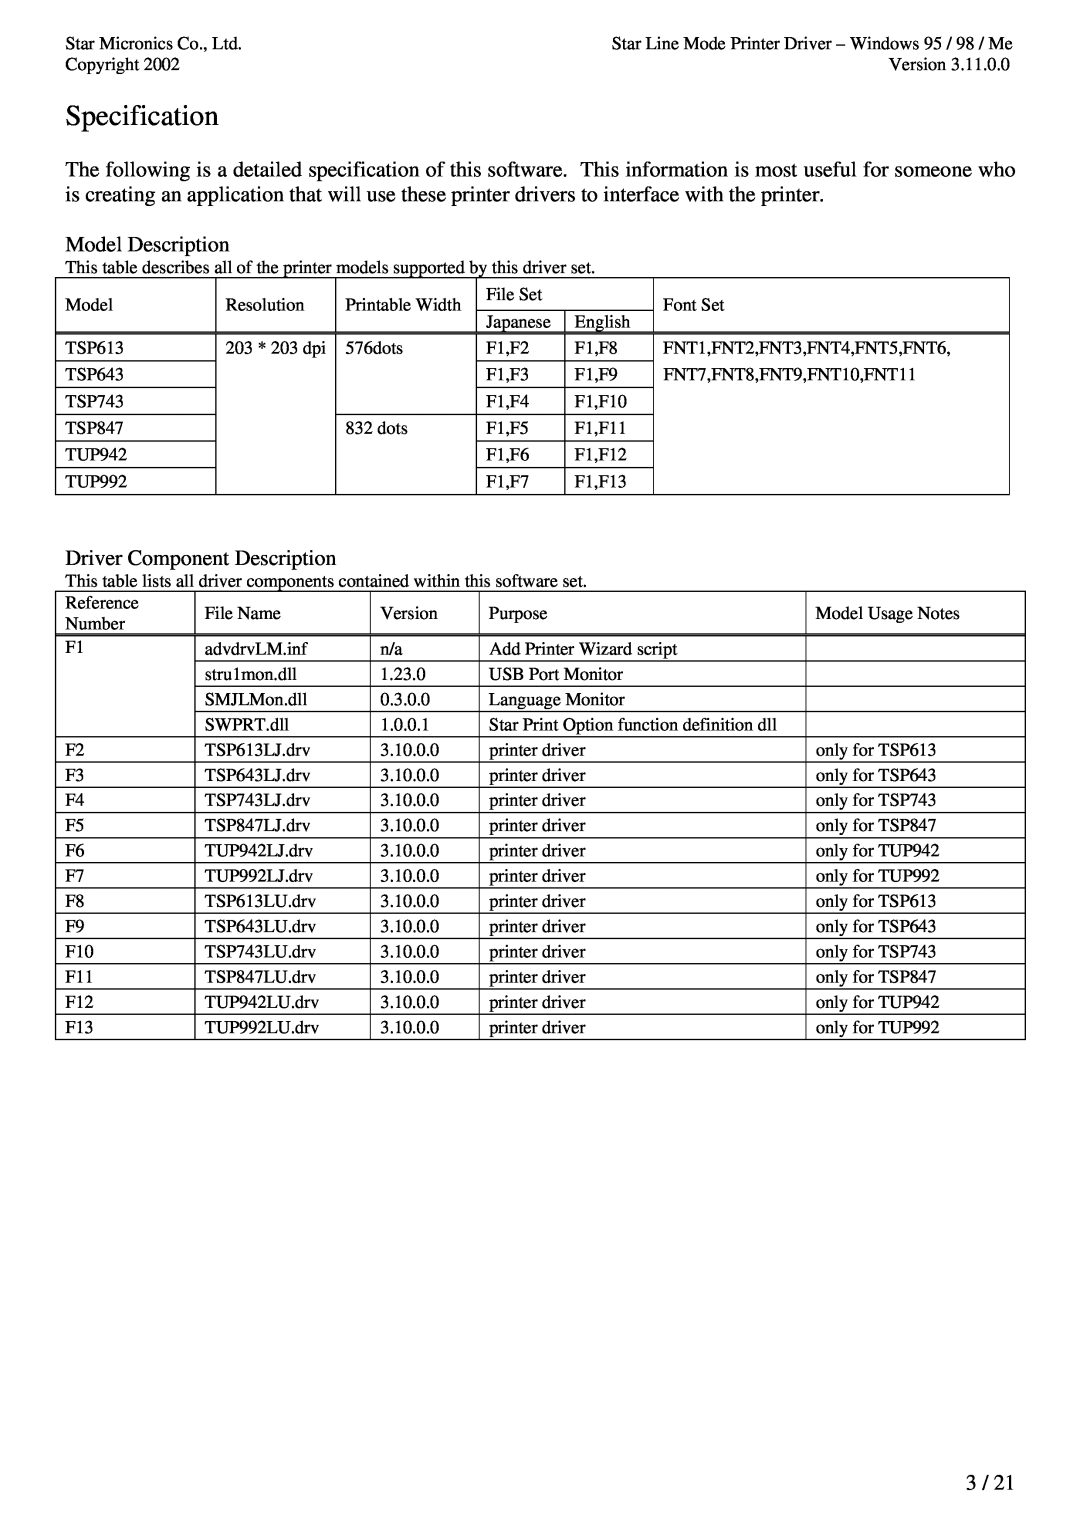 Star Micronics TUP992 user manual Specification, Model Description, Driver Component Description 